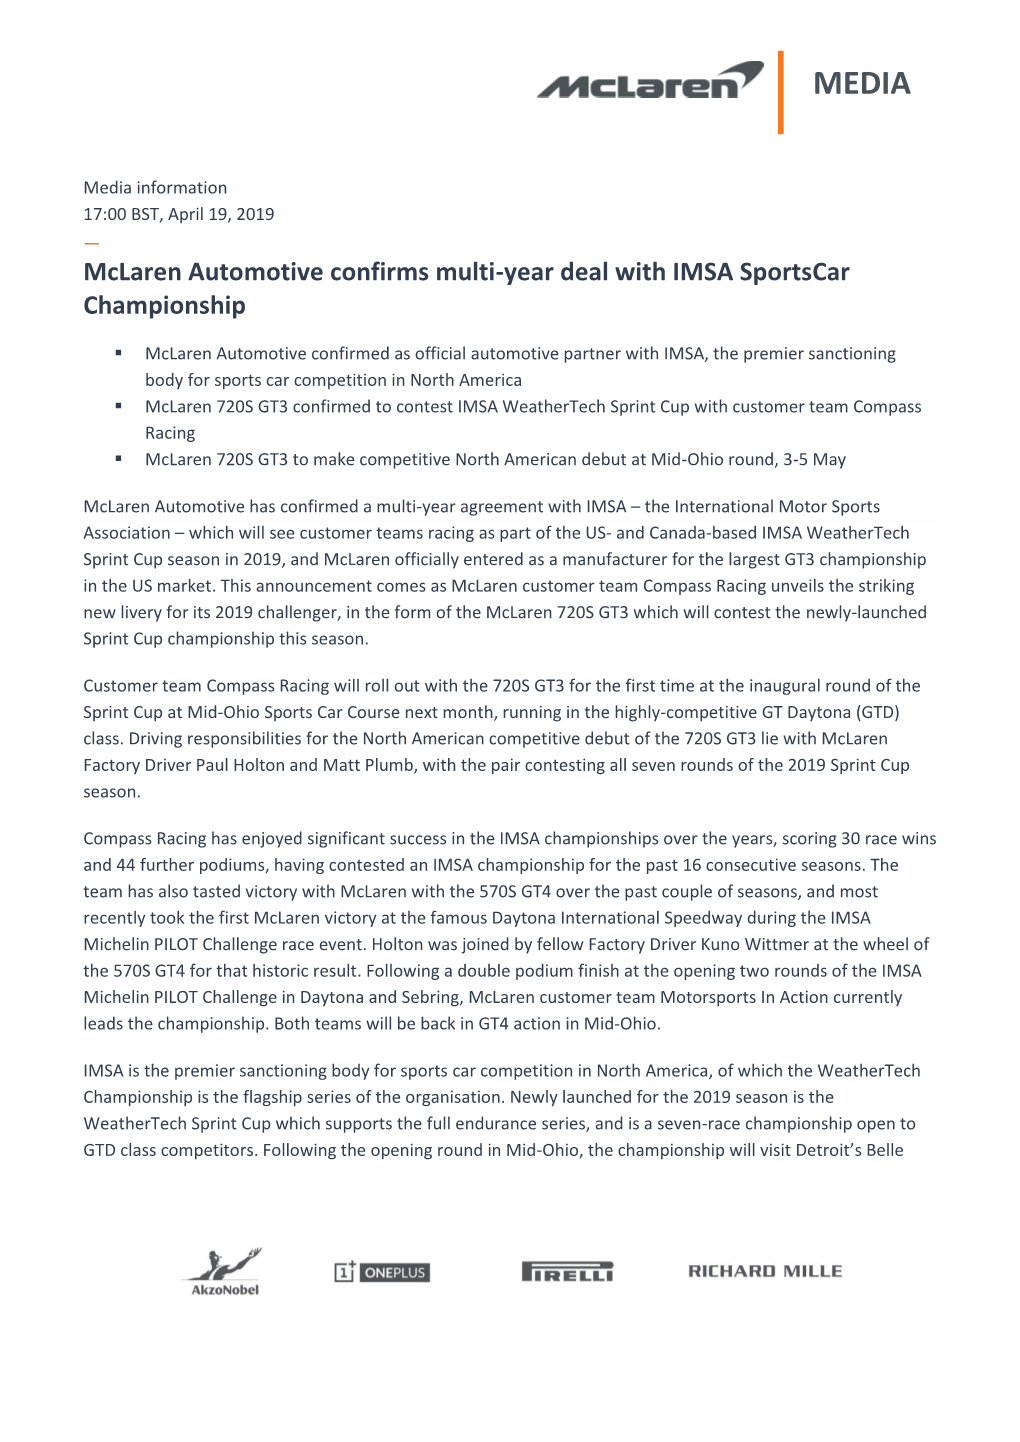 Mclaren Automotive Confirms Multi-Year Deal with IMSA Sportscar Championship